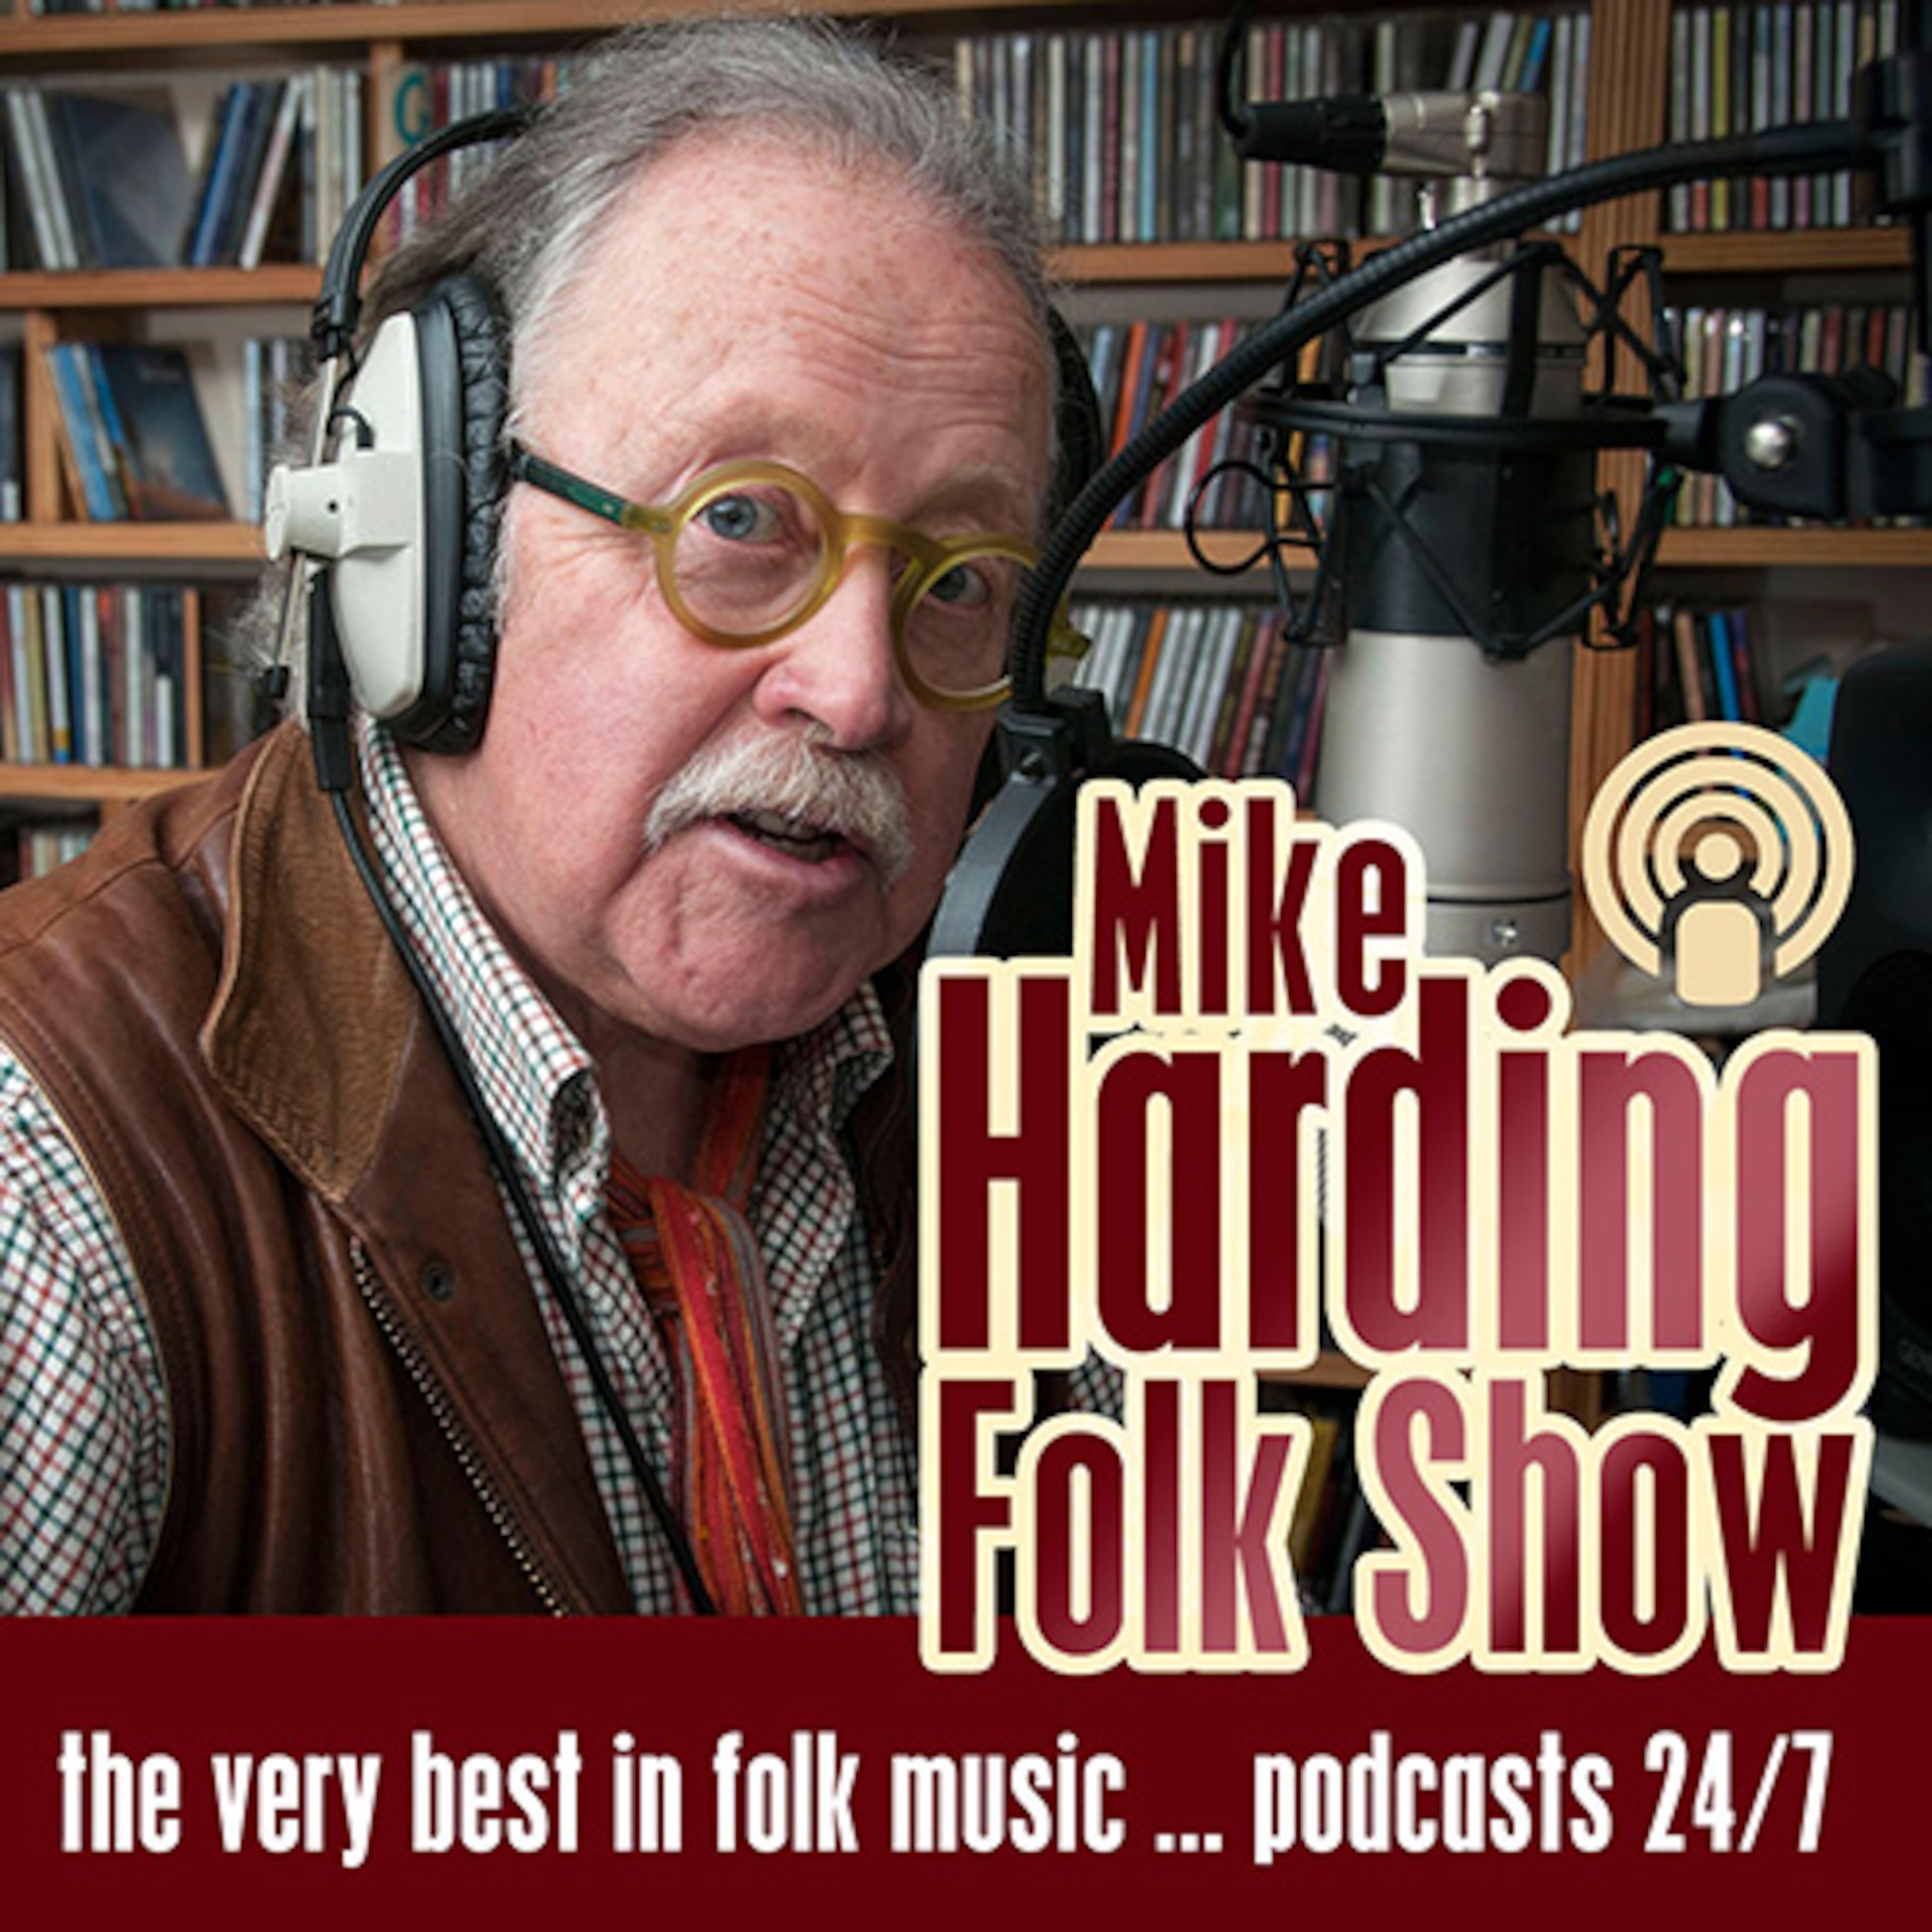 Mike Harding Folk Show 152